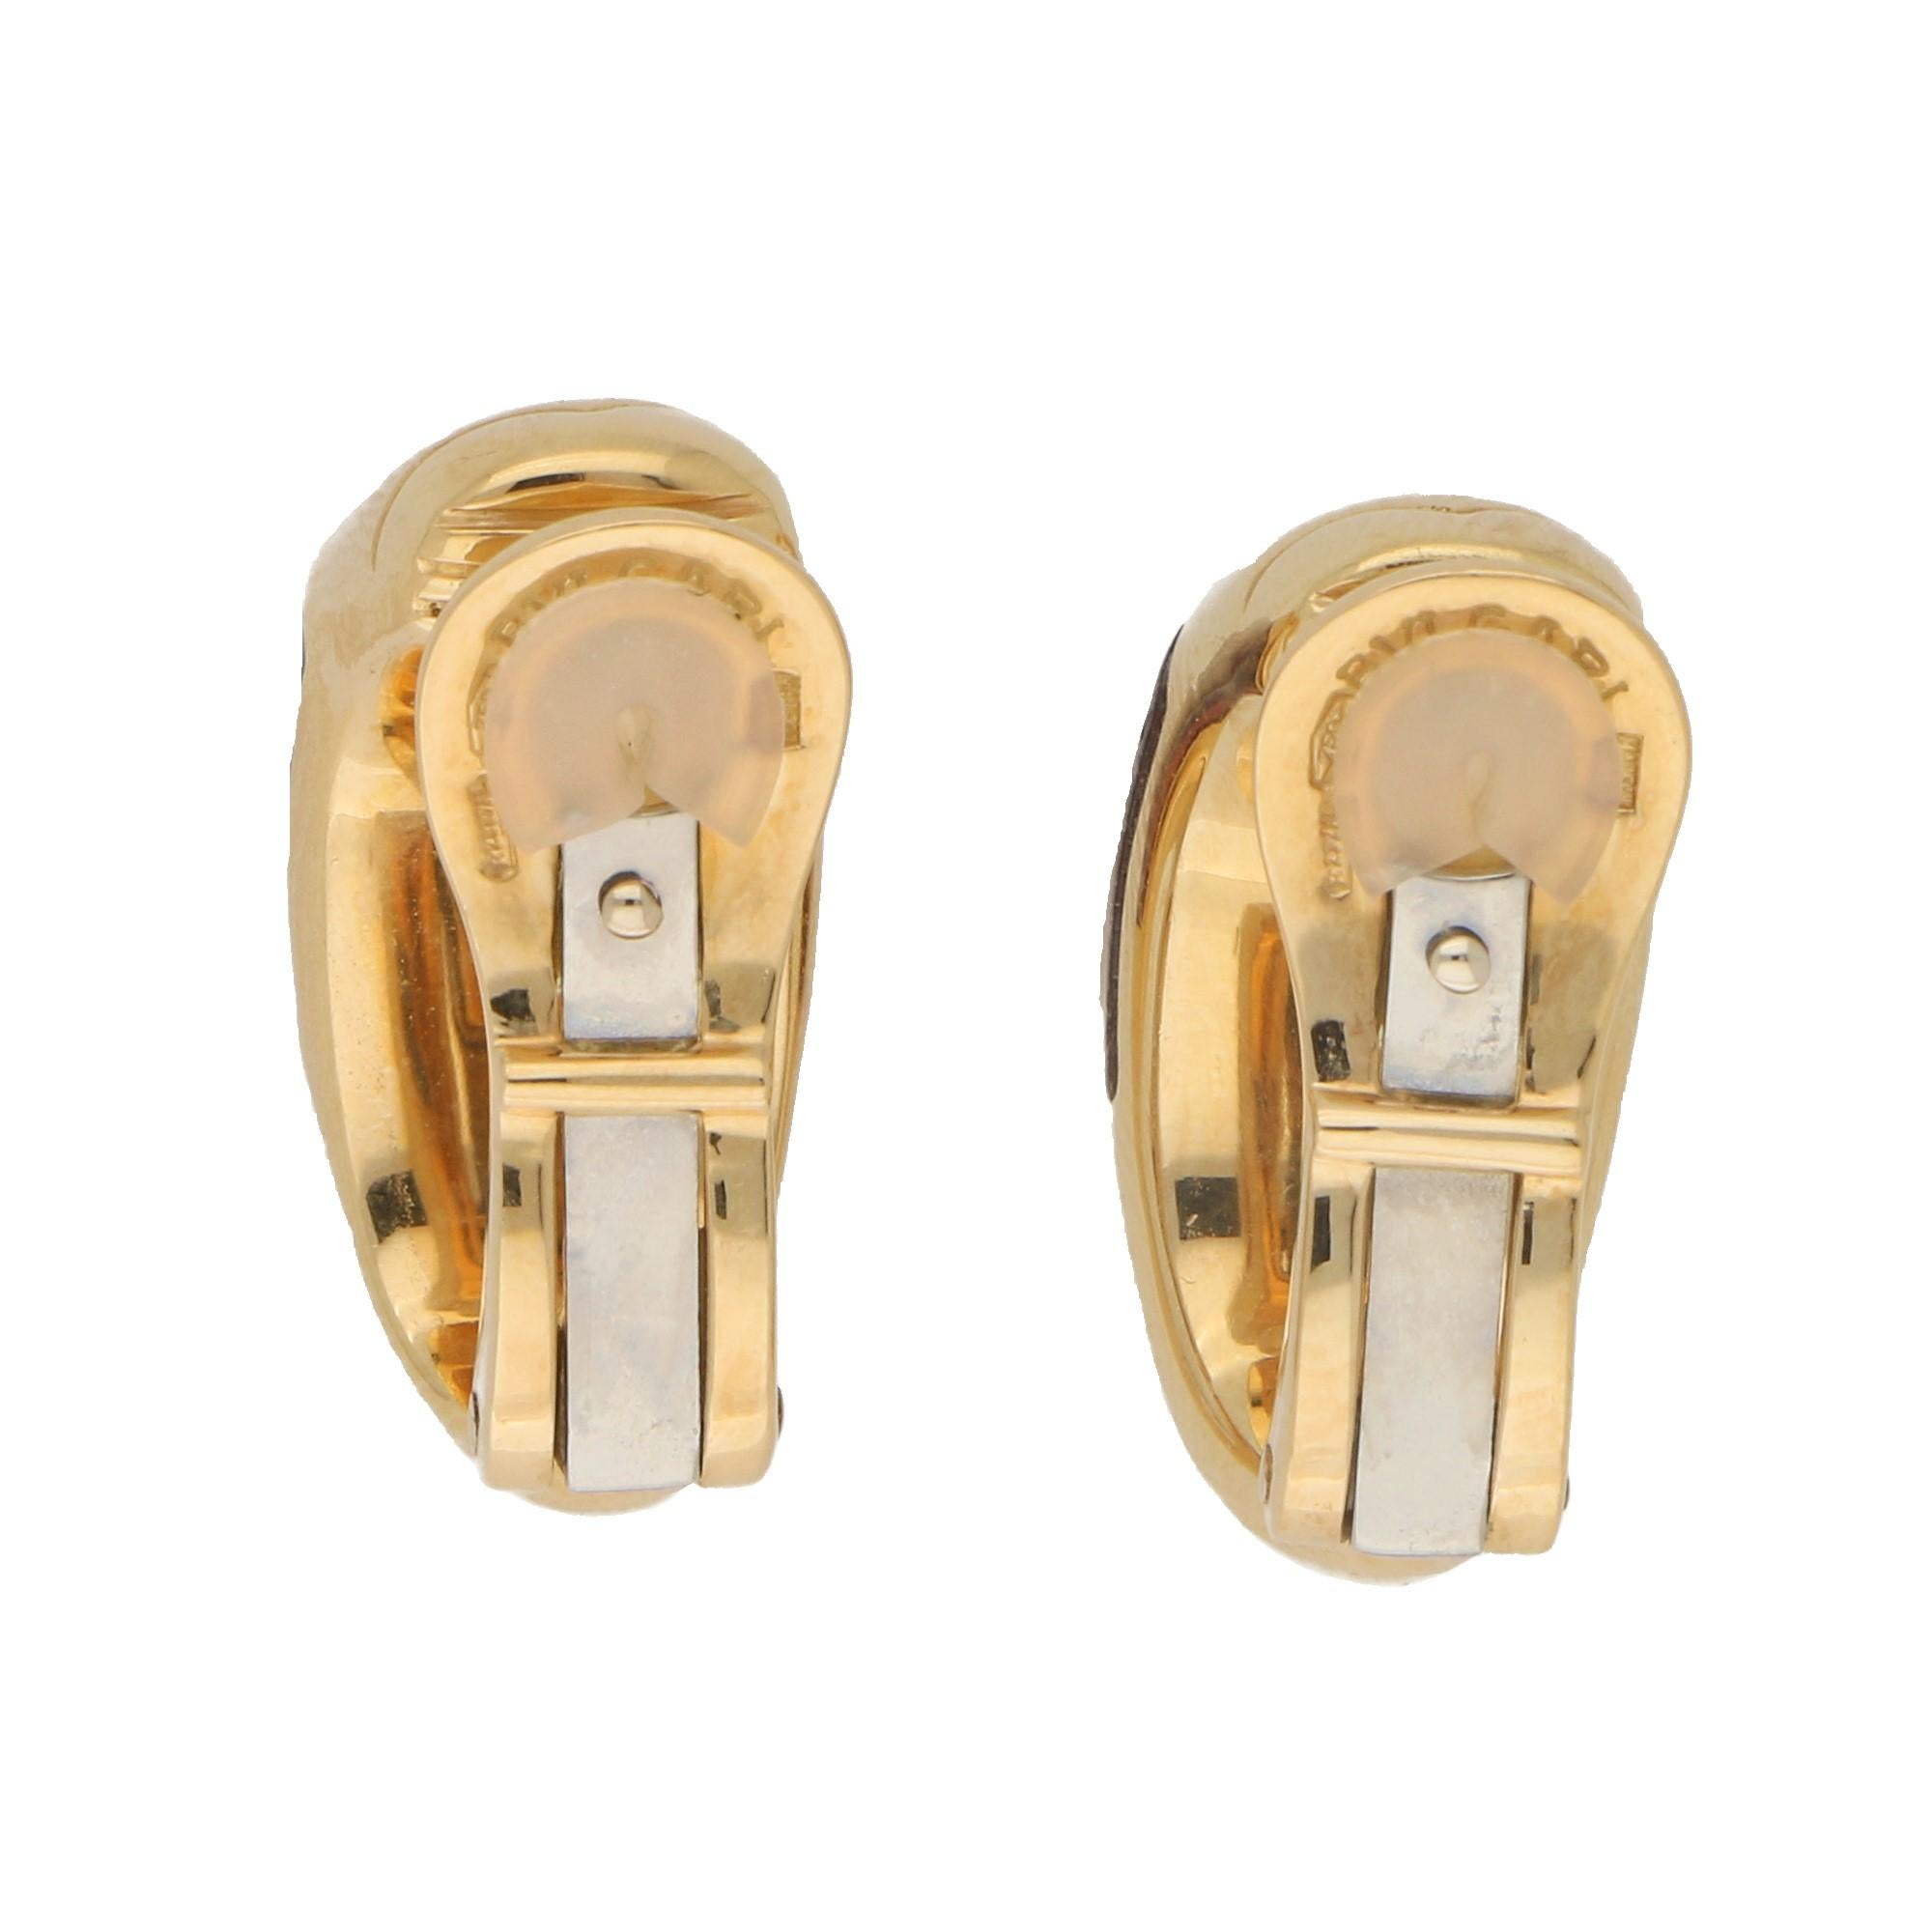 Cabochon Bvlgari Tronchetto Pink Tourmaline Clip Earrings Set in 18 Karat Yellow Gold